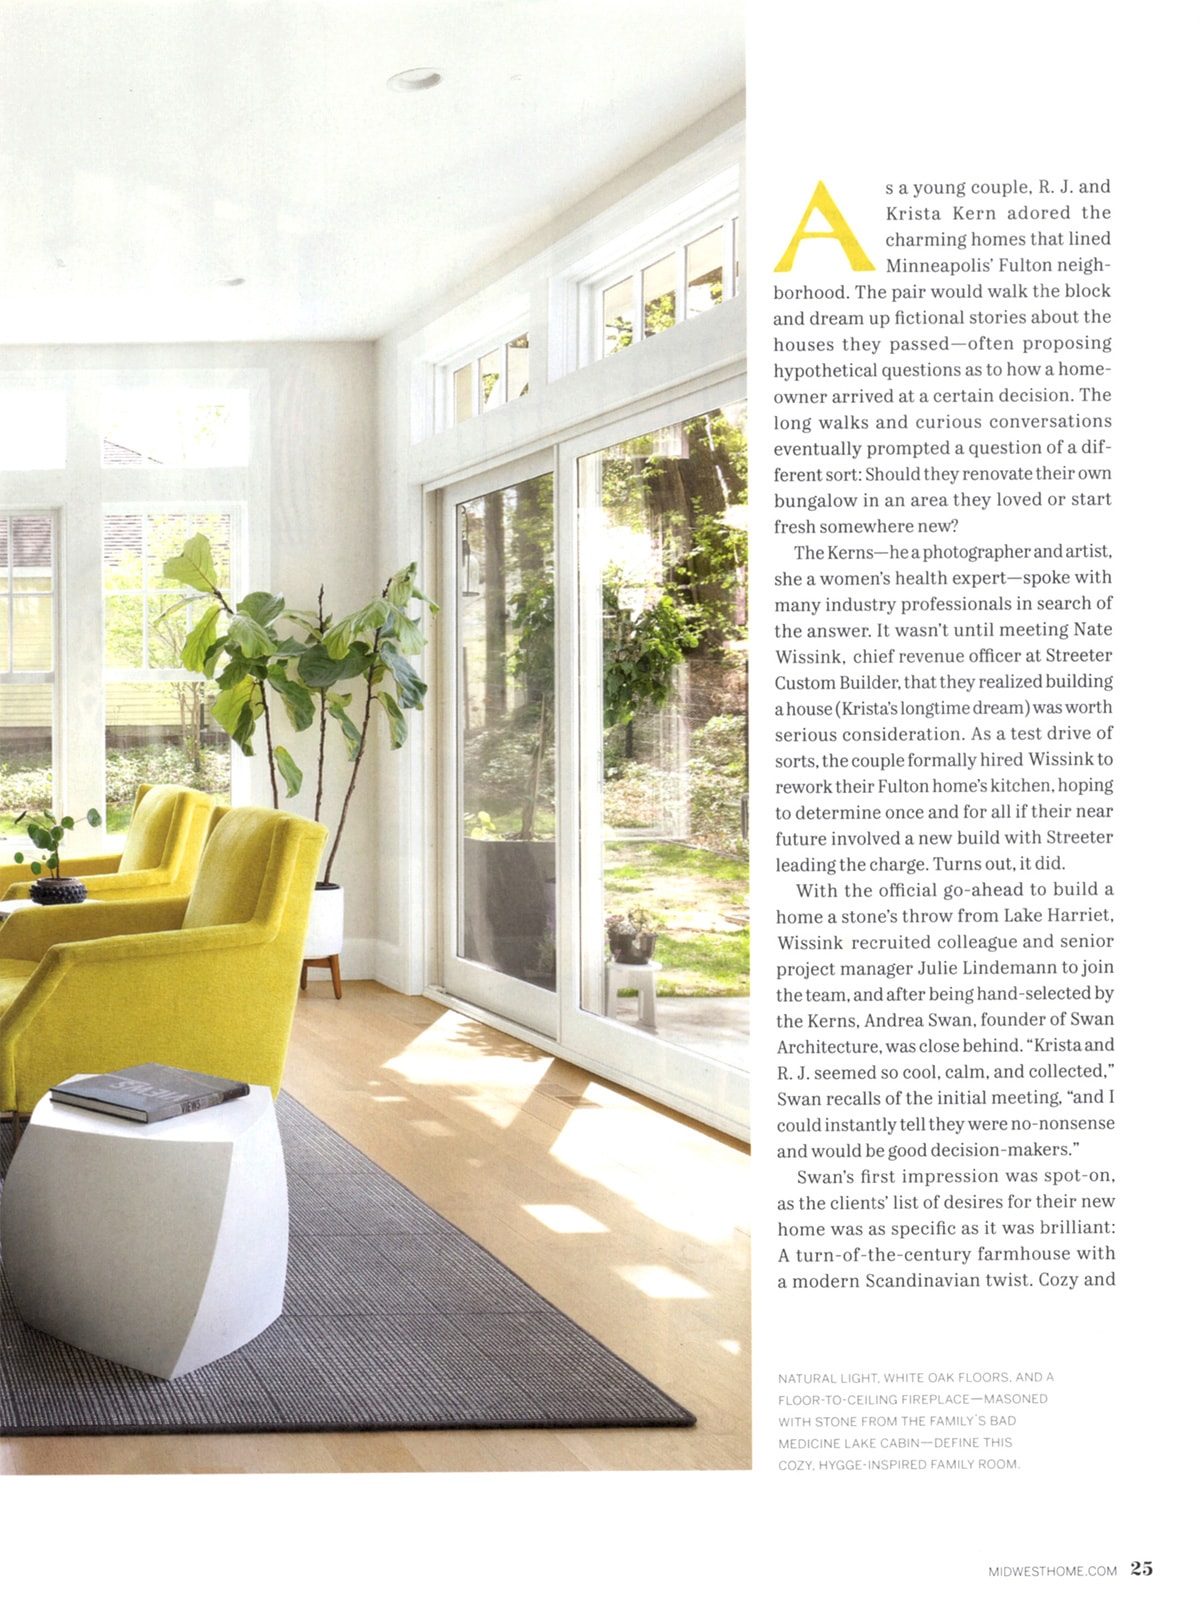 MWH Home Design Article